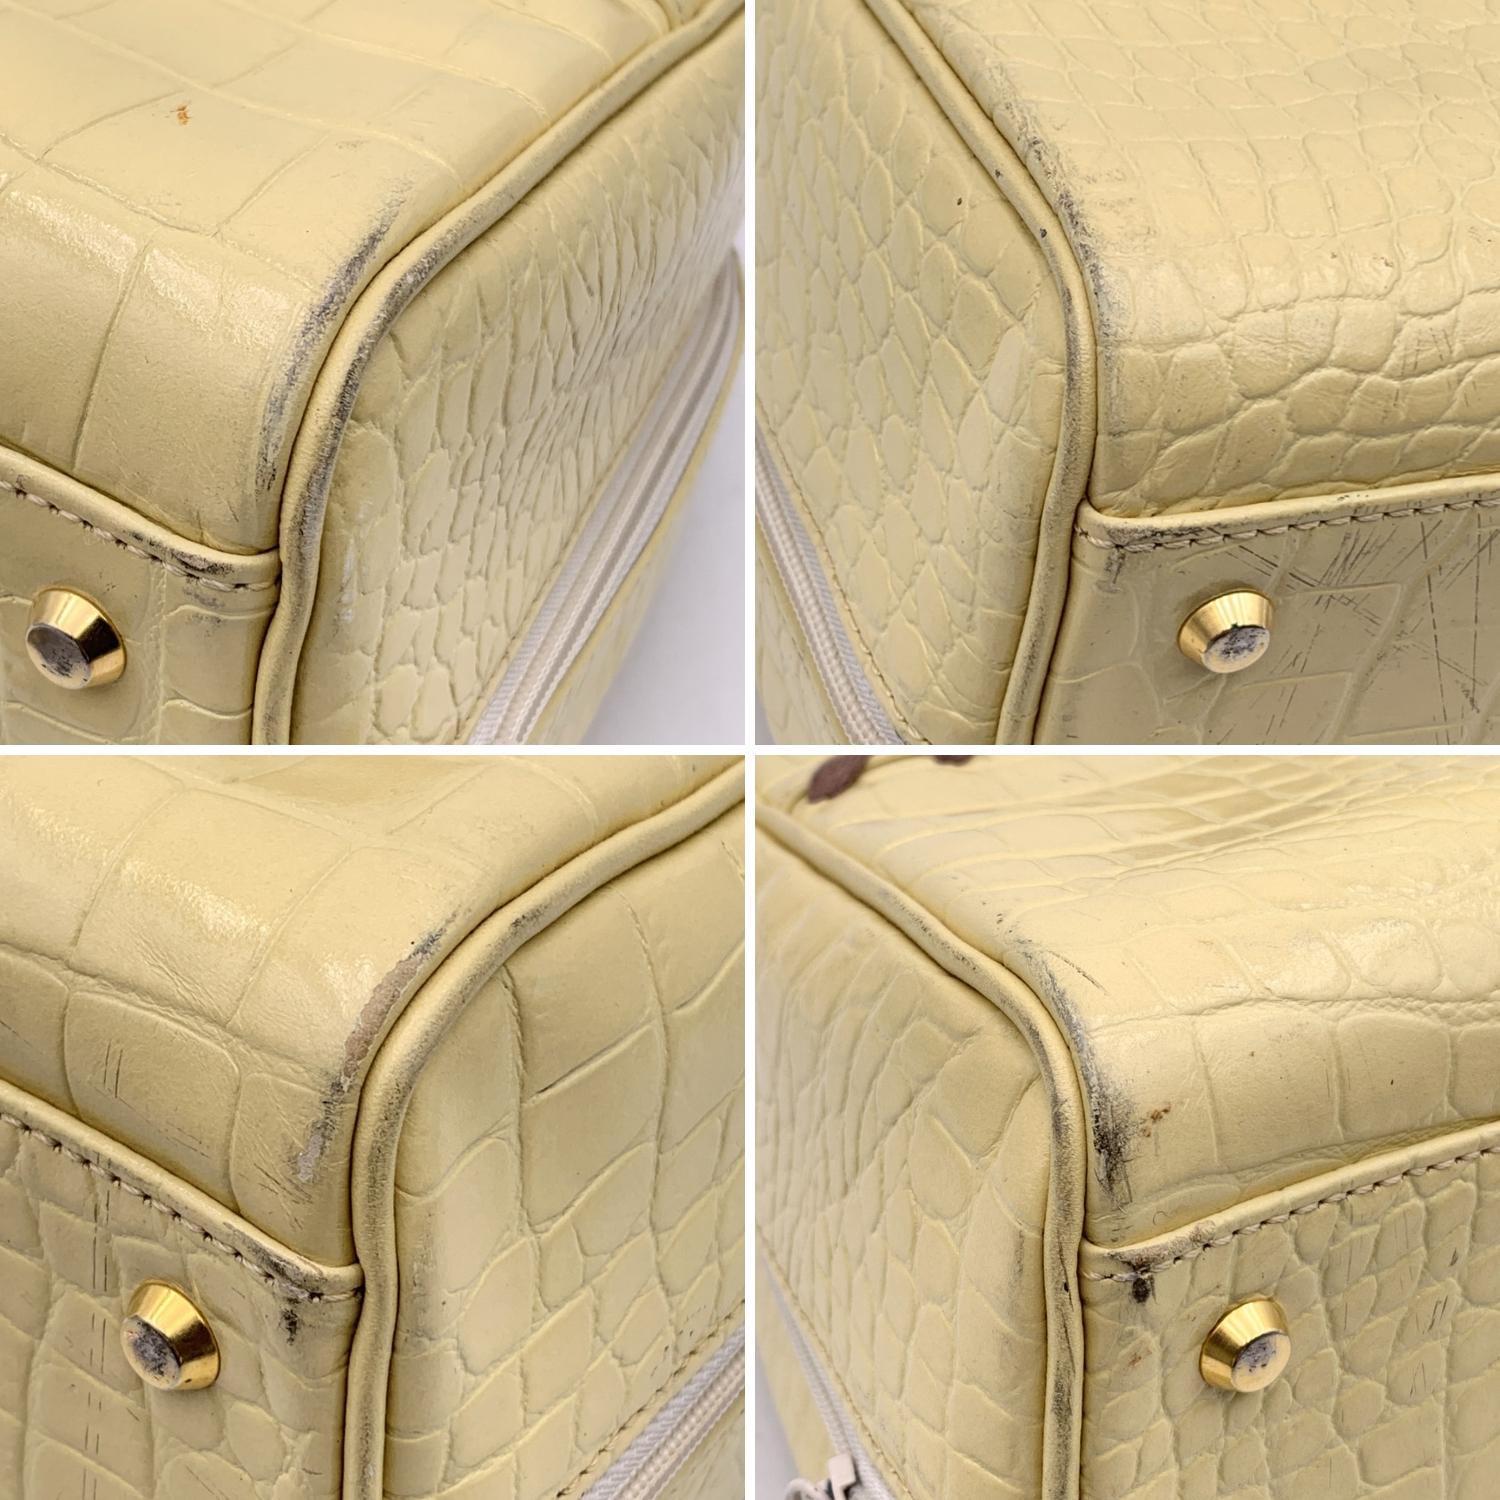 Yves Saint Laurent Vintage Beige Embossed Leather Bowling Bag 1